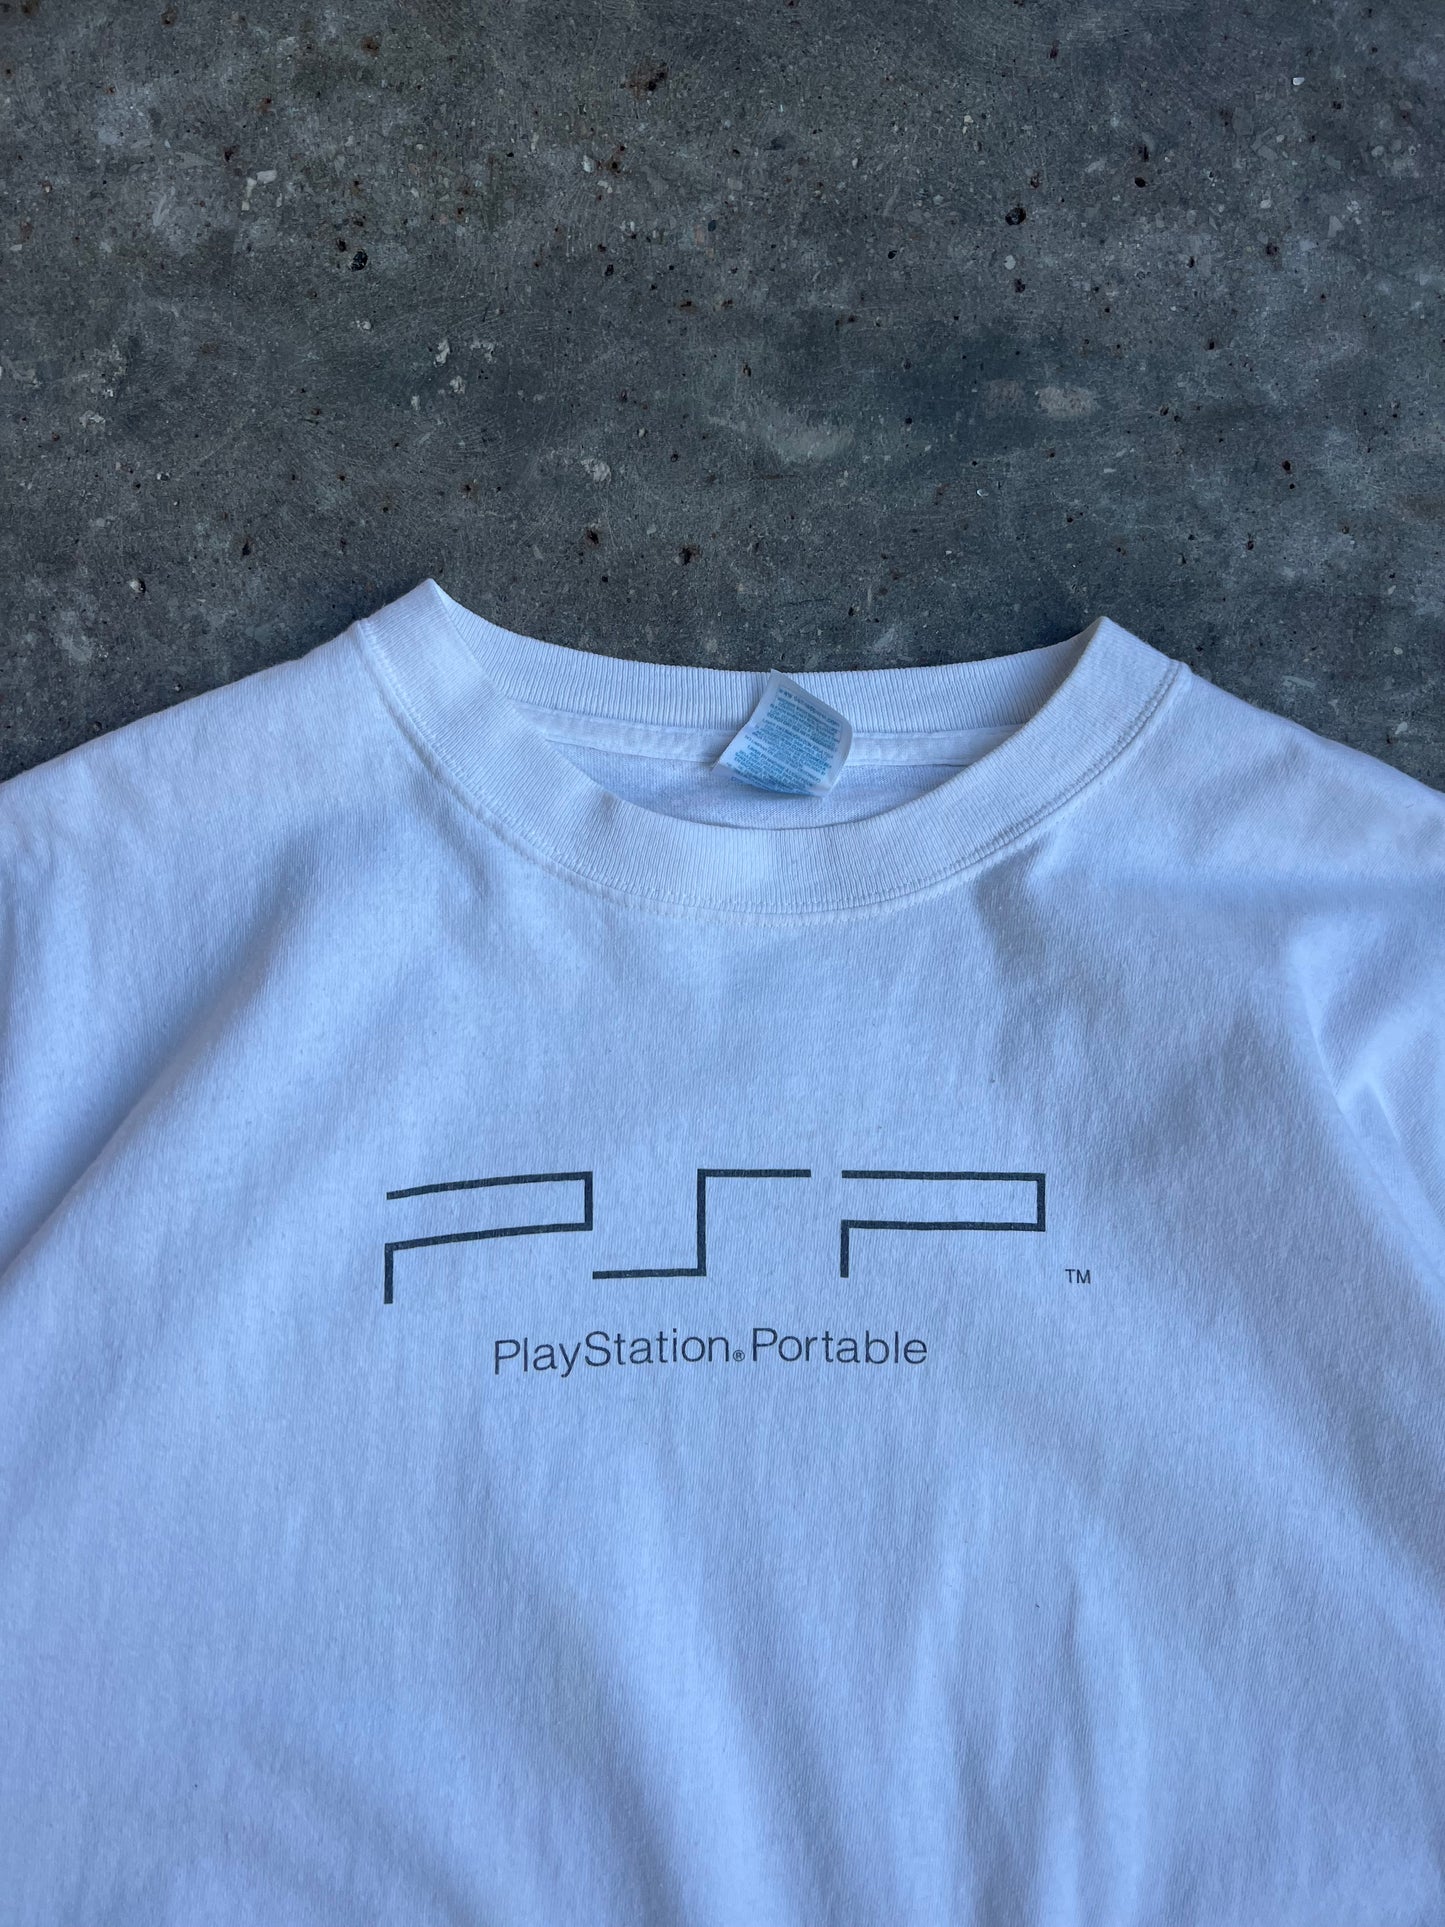 Vintage PlayStation Portable Shirt - XL